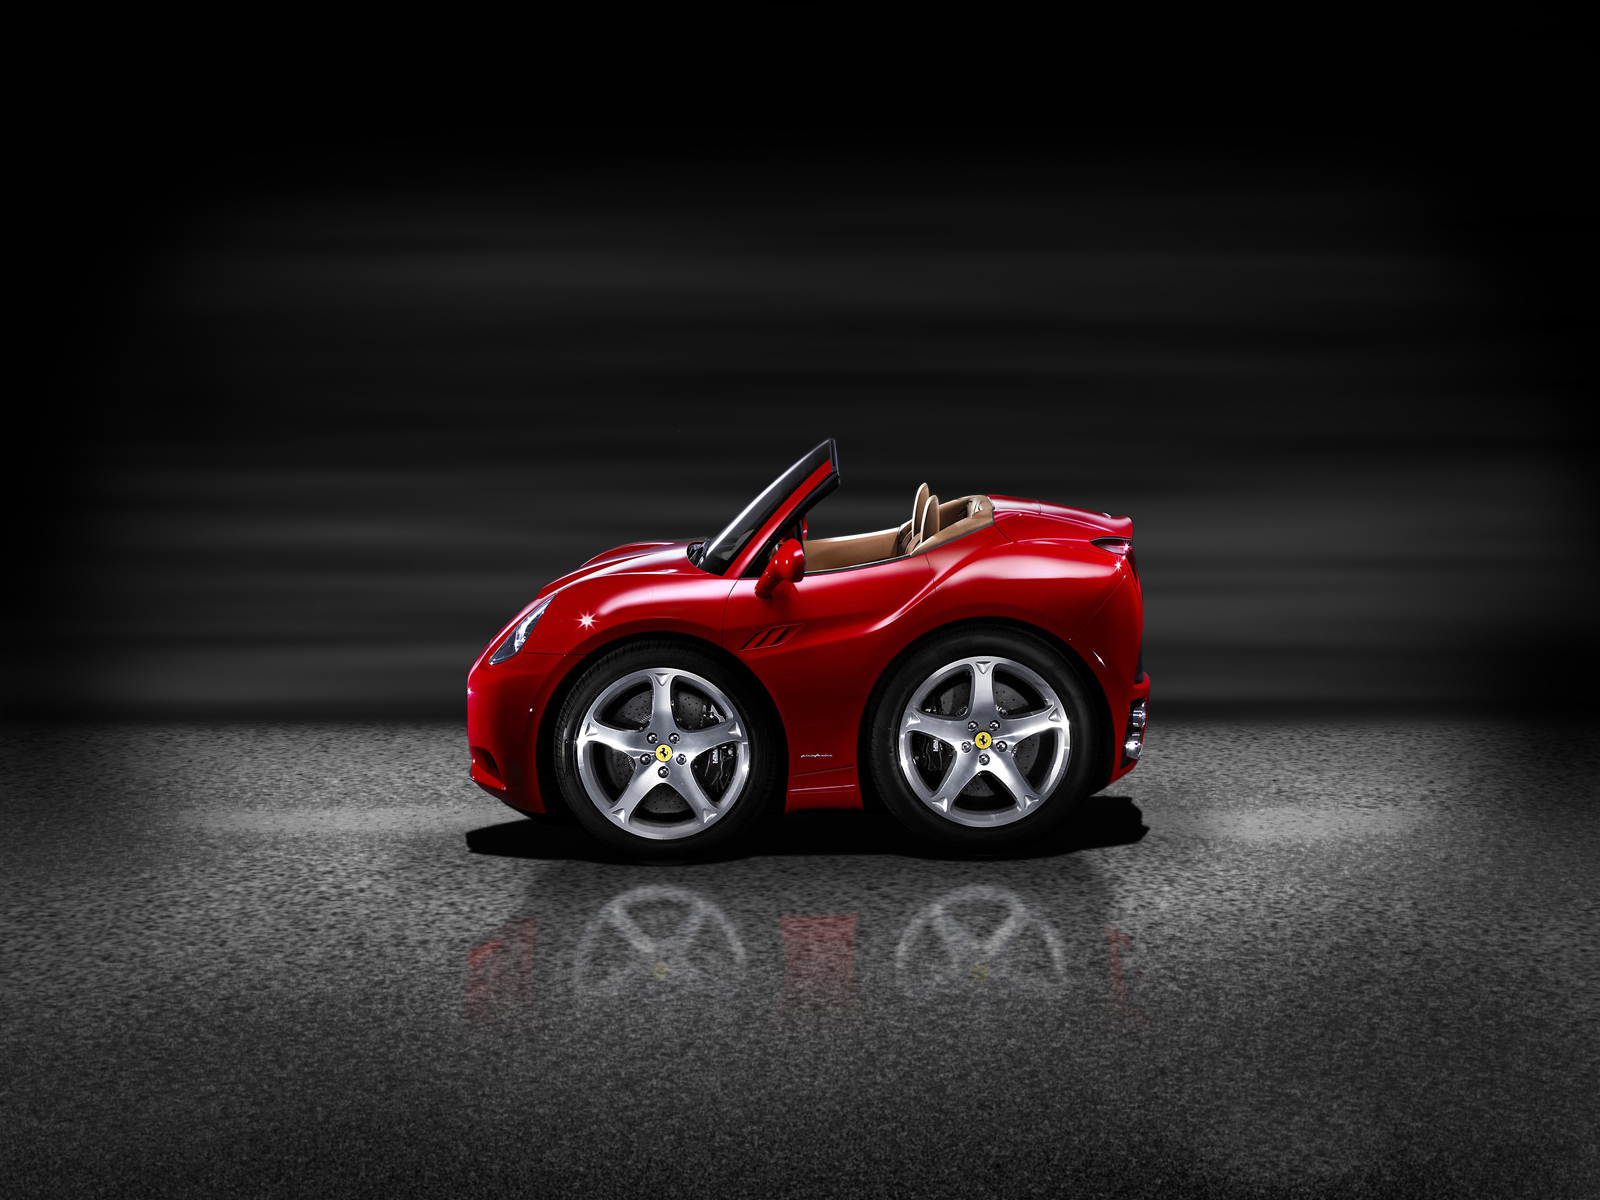 Ferrari California.jpg